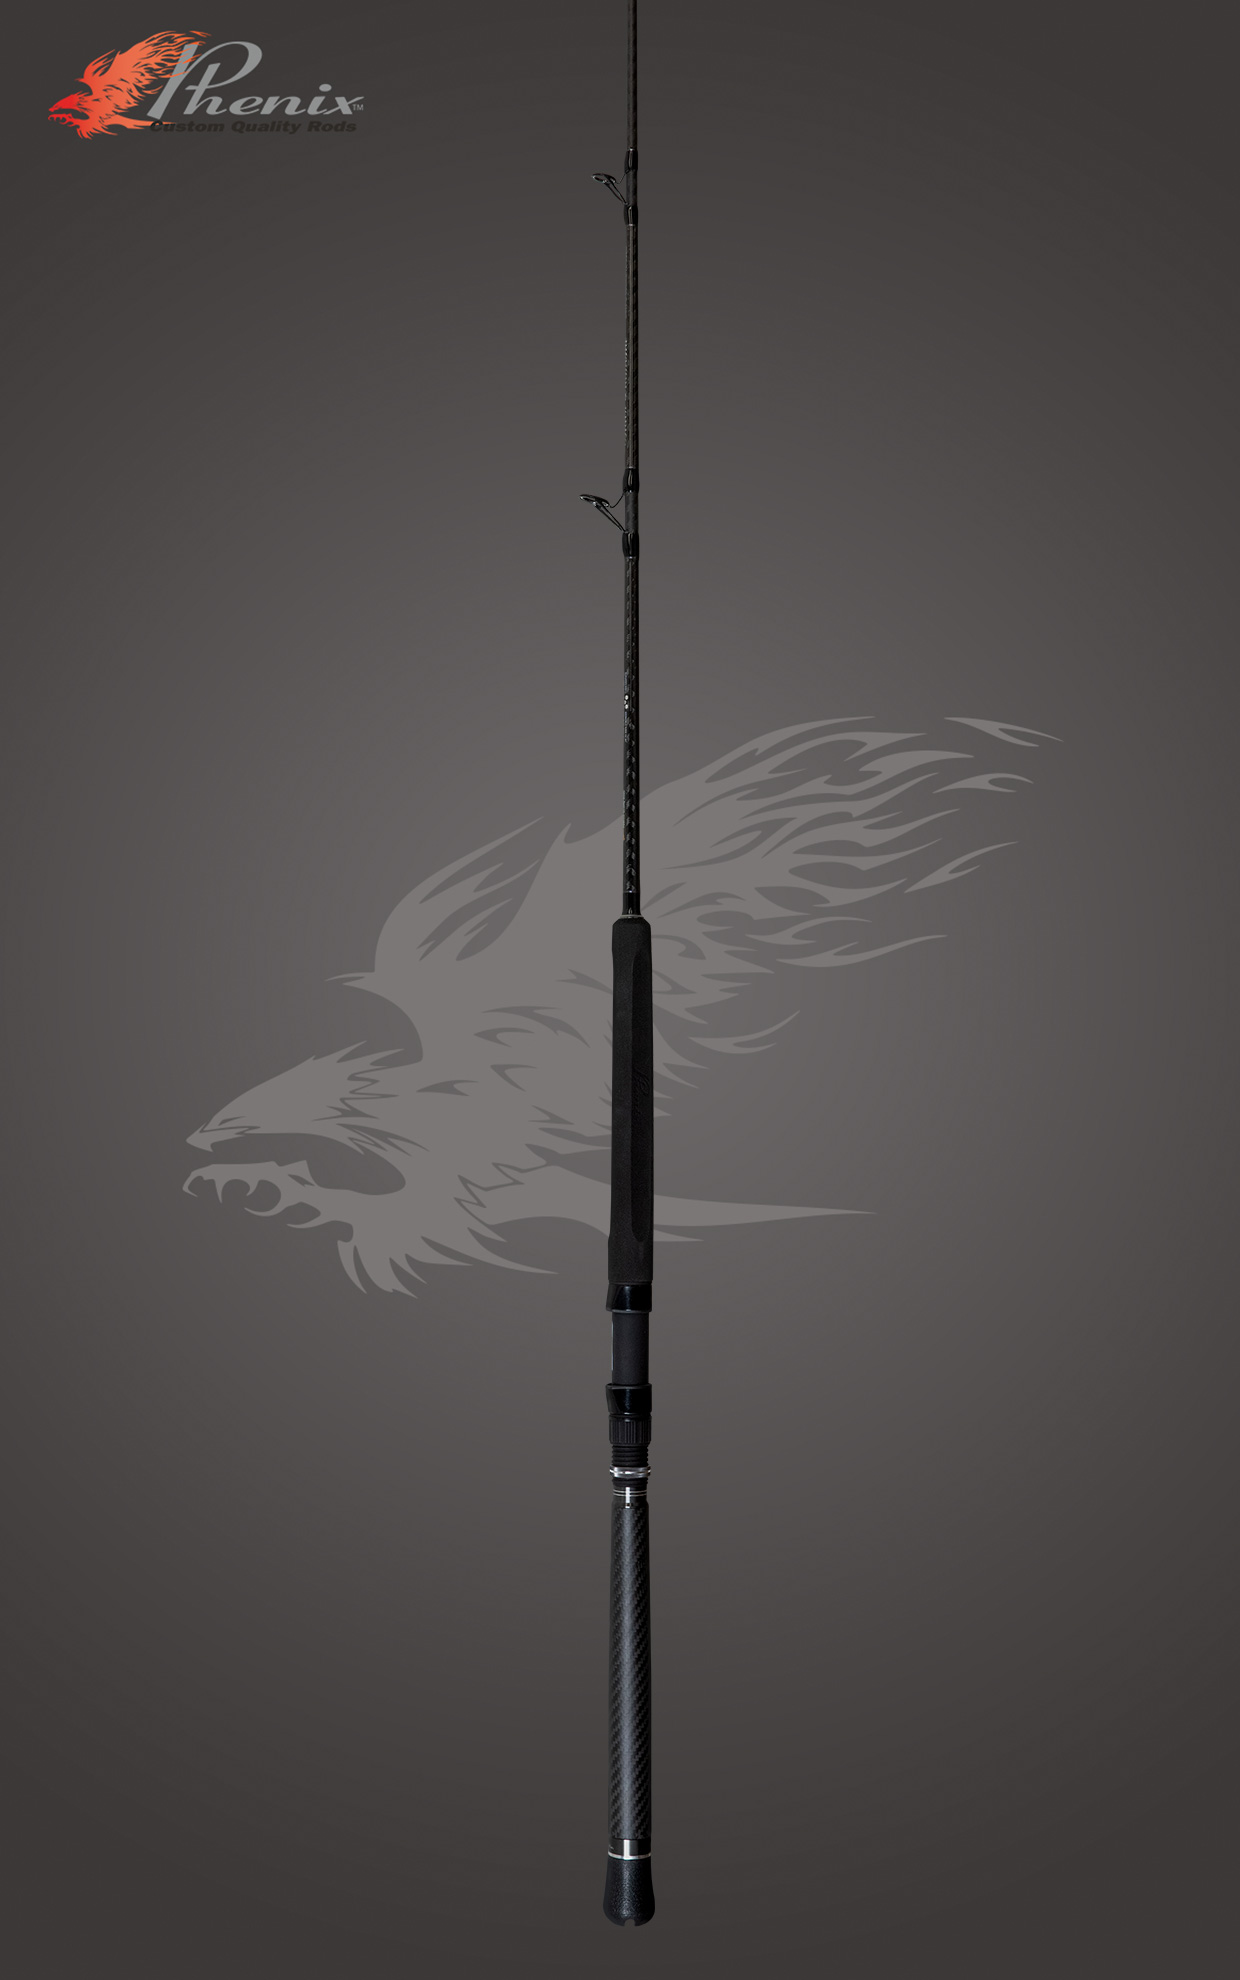 Classic BFS - Casting Rods - Phenix Rods